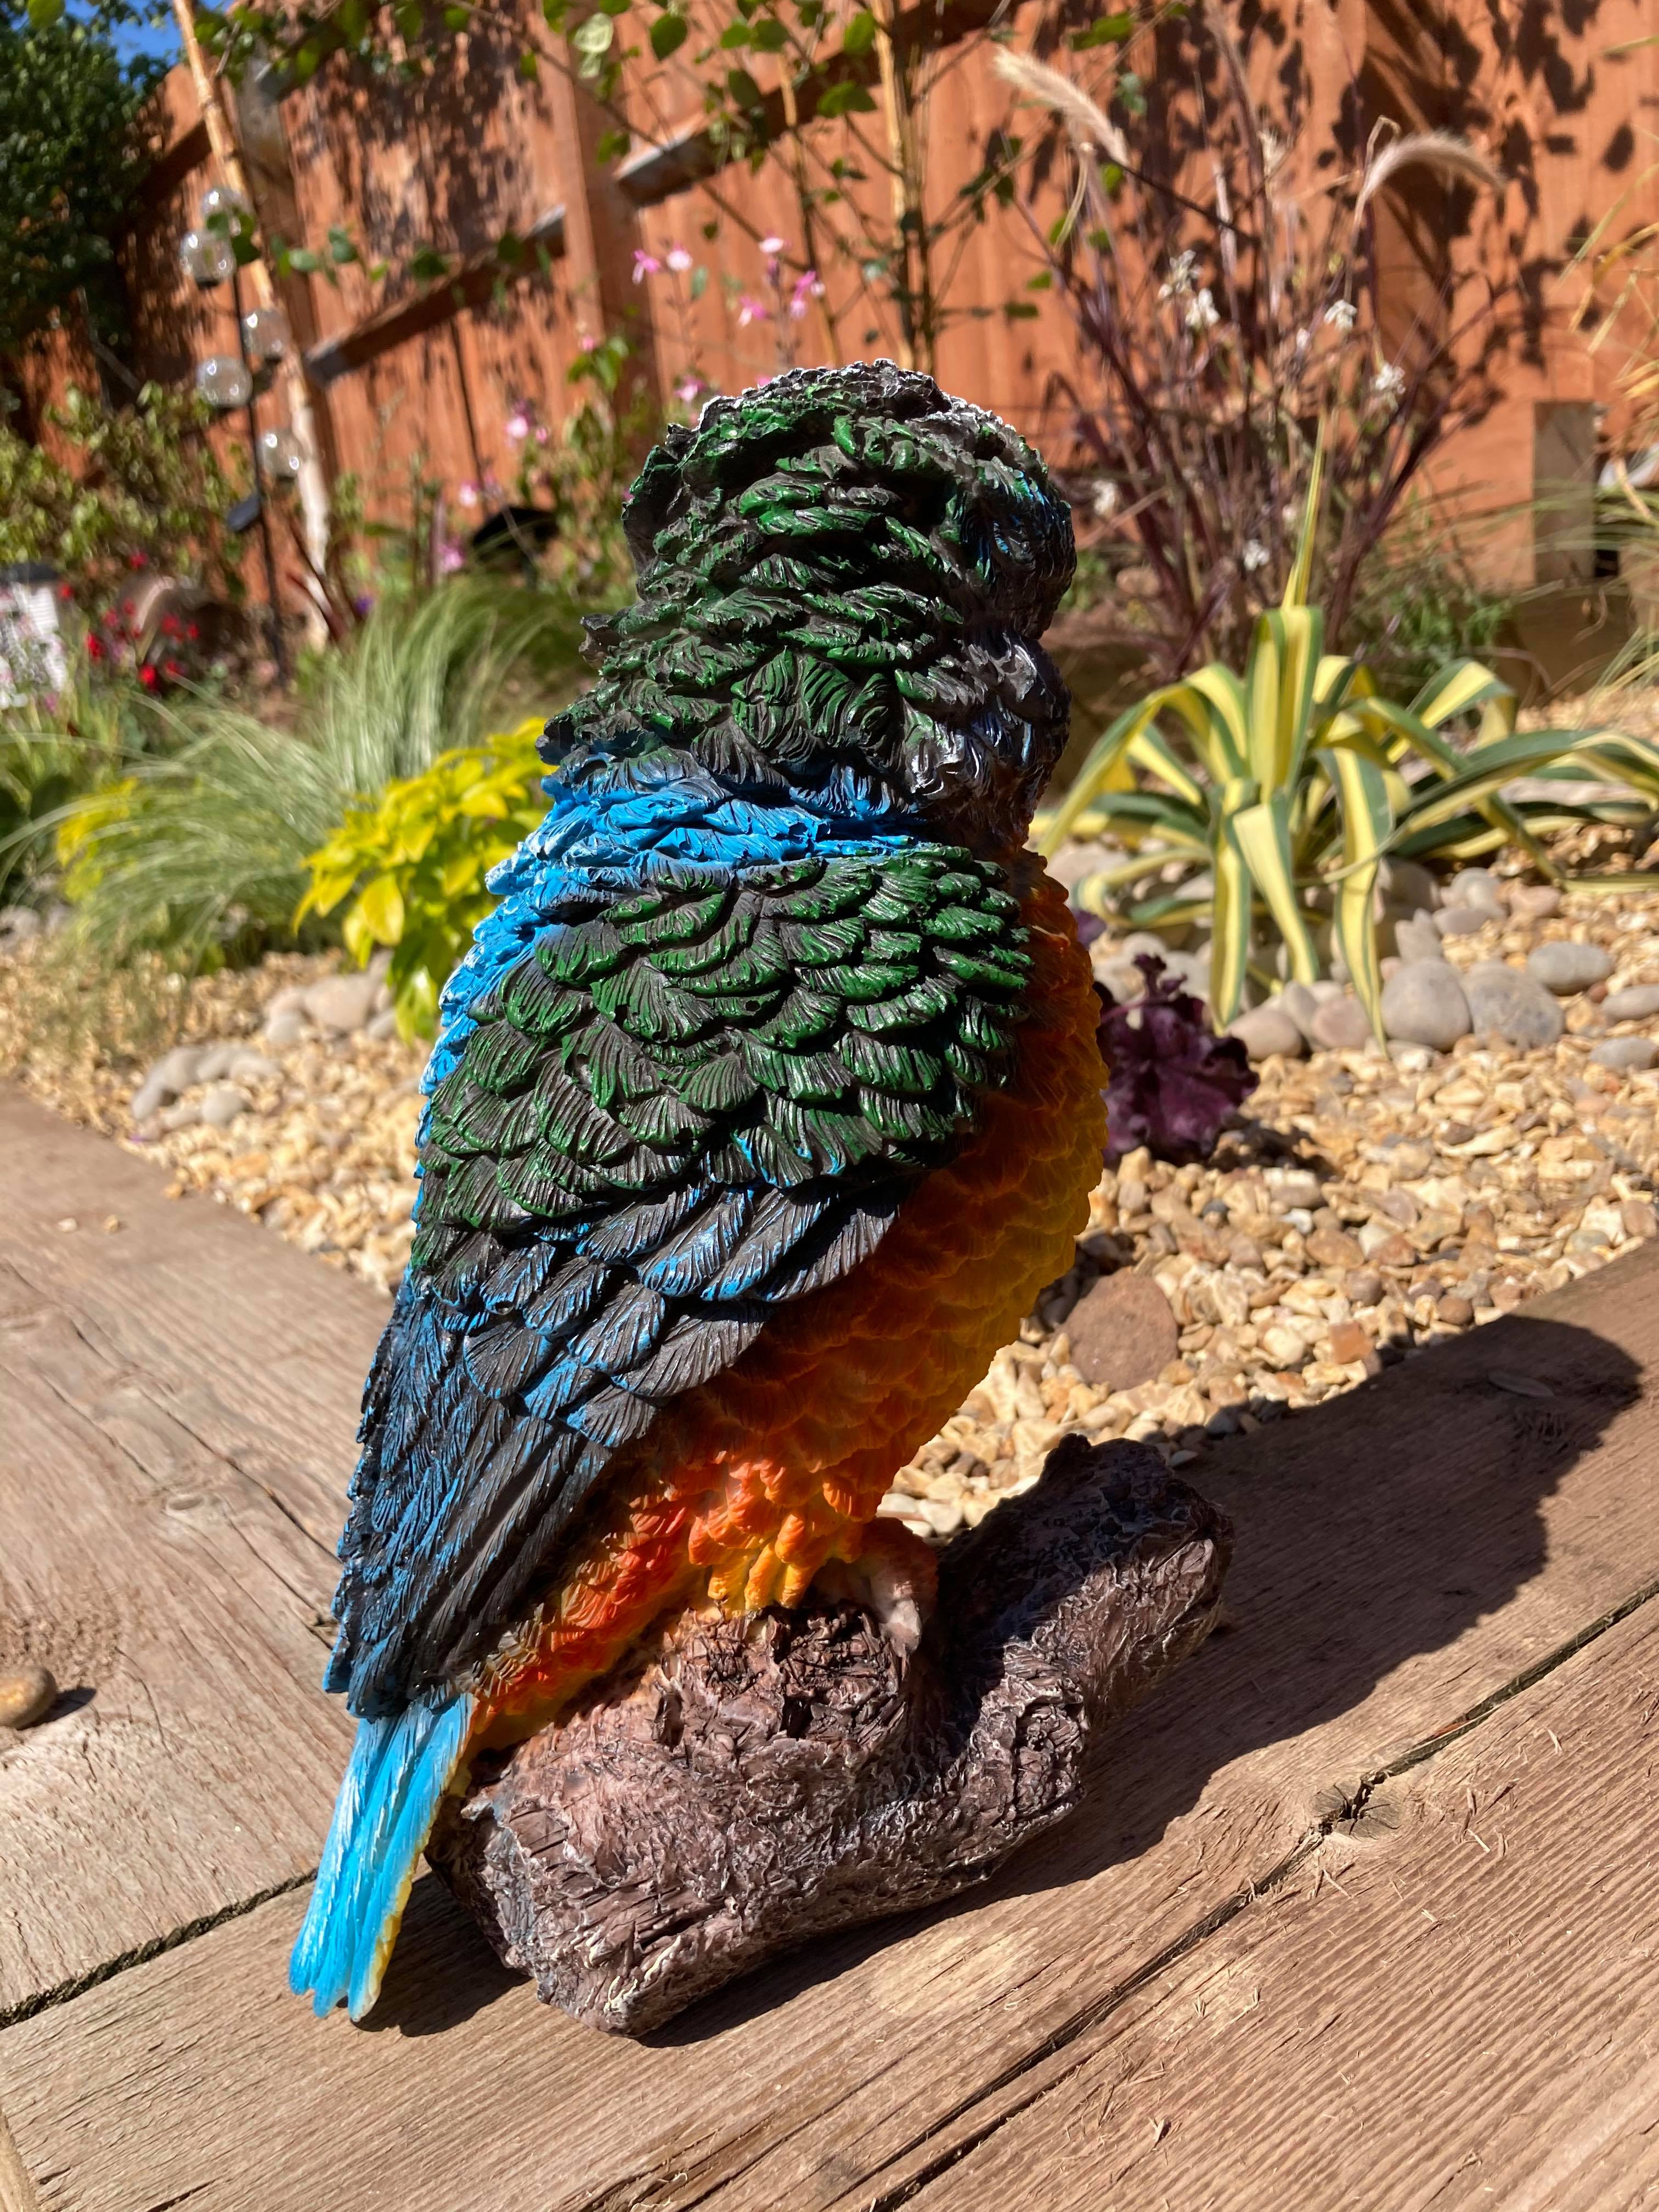 Colourful Kingfisher